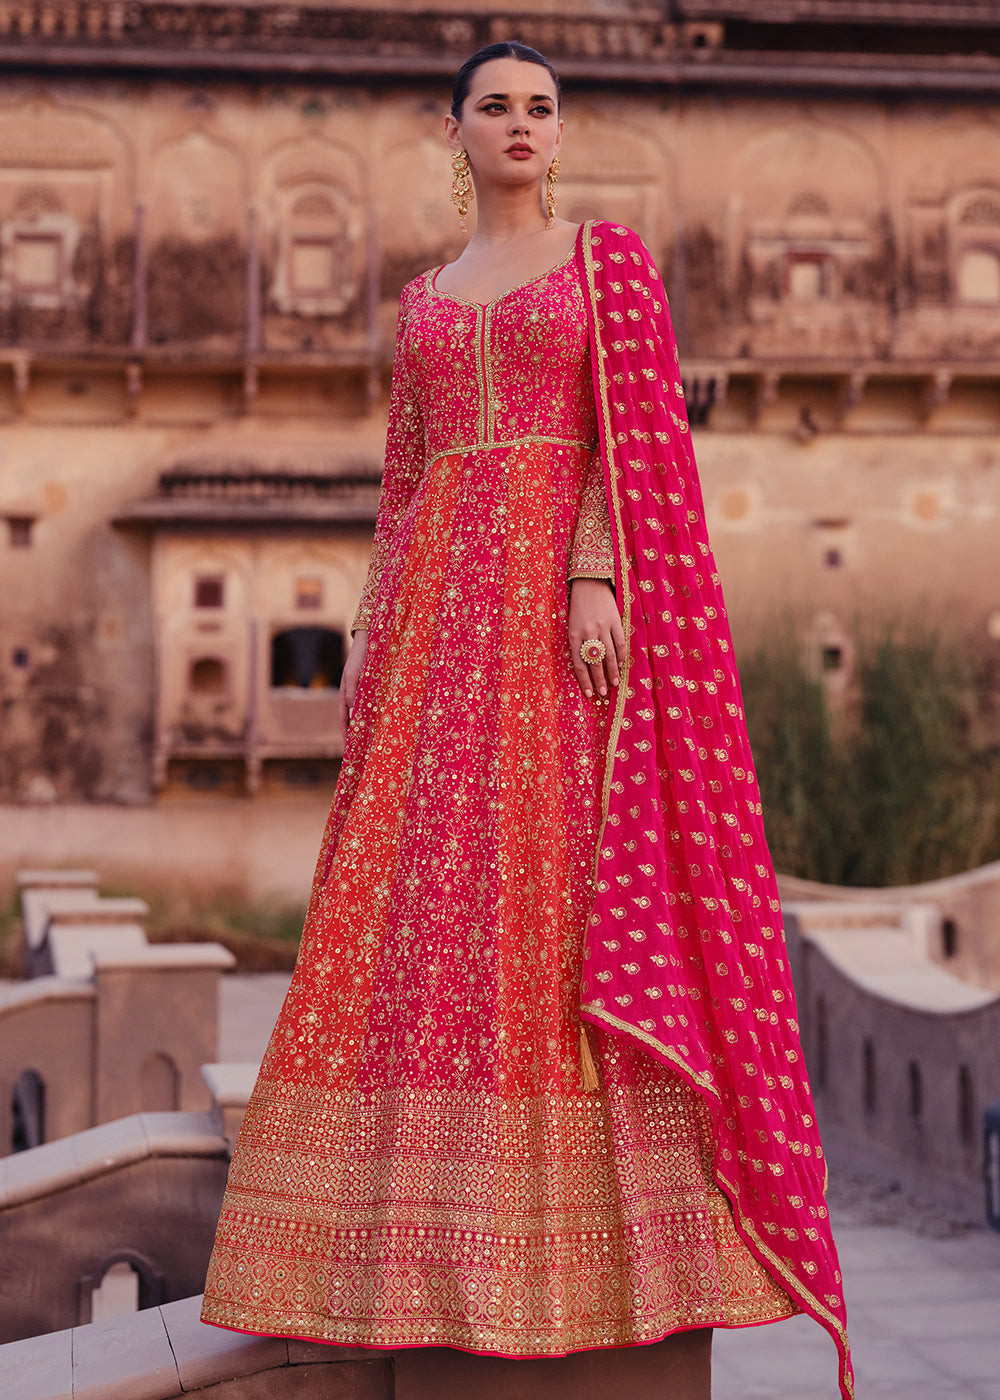 Buy Now Pink & Orange Heavy Georgette Floor Length Anarkali Gown Online in USA, UK, Australia, Canada & Worldwide at Empress Clothing.